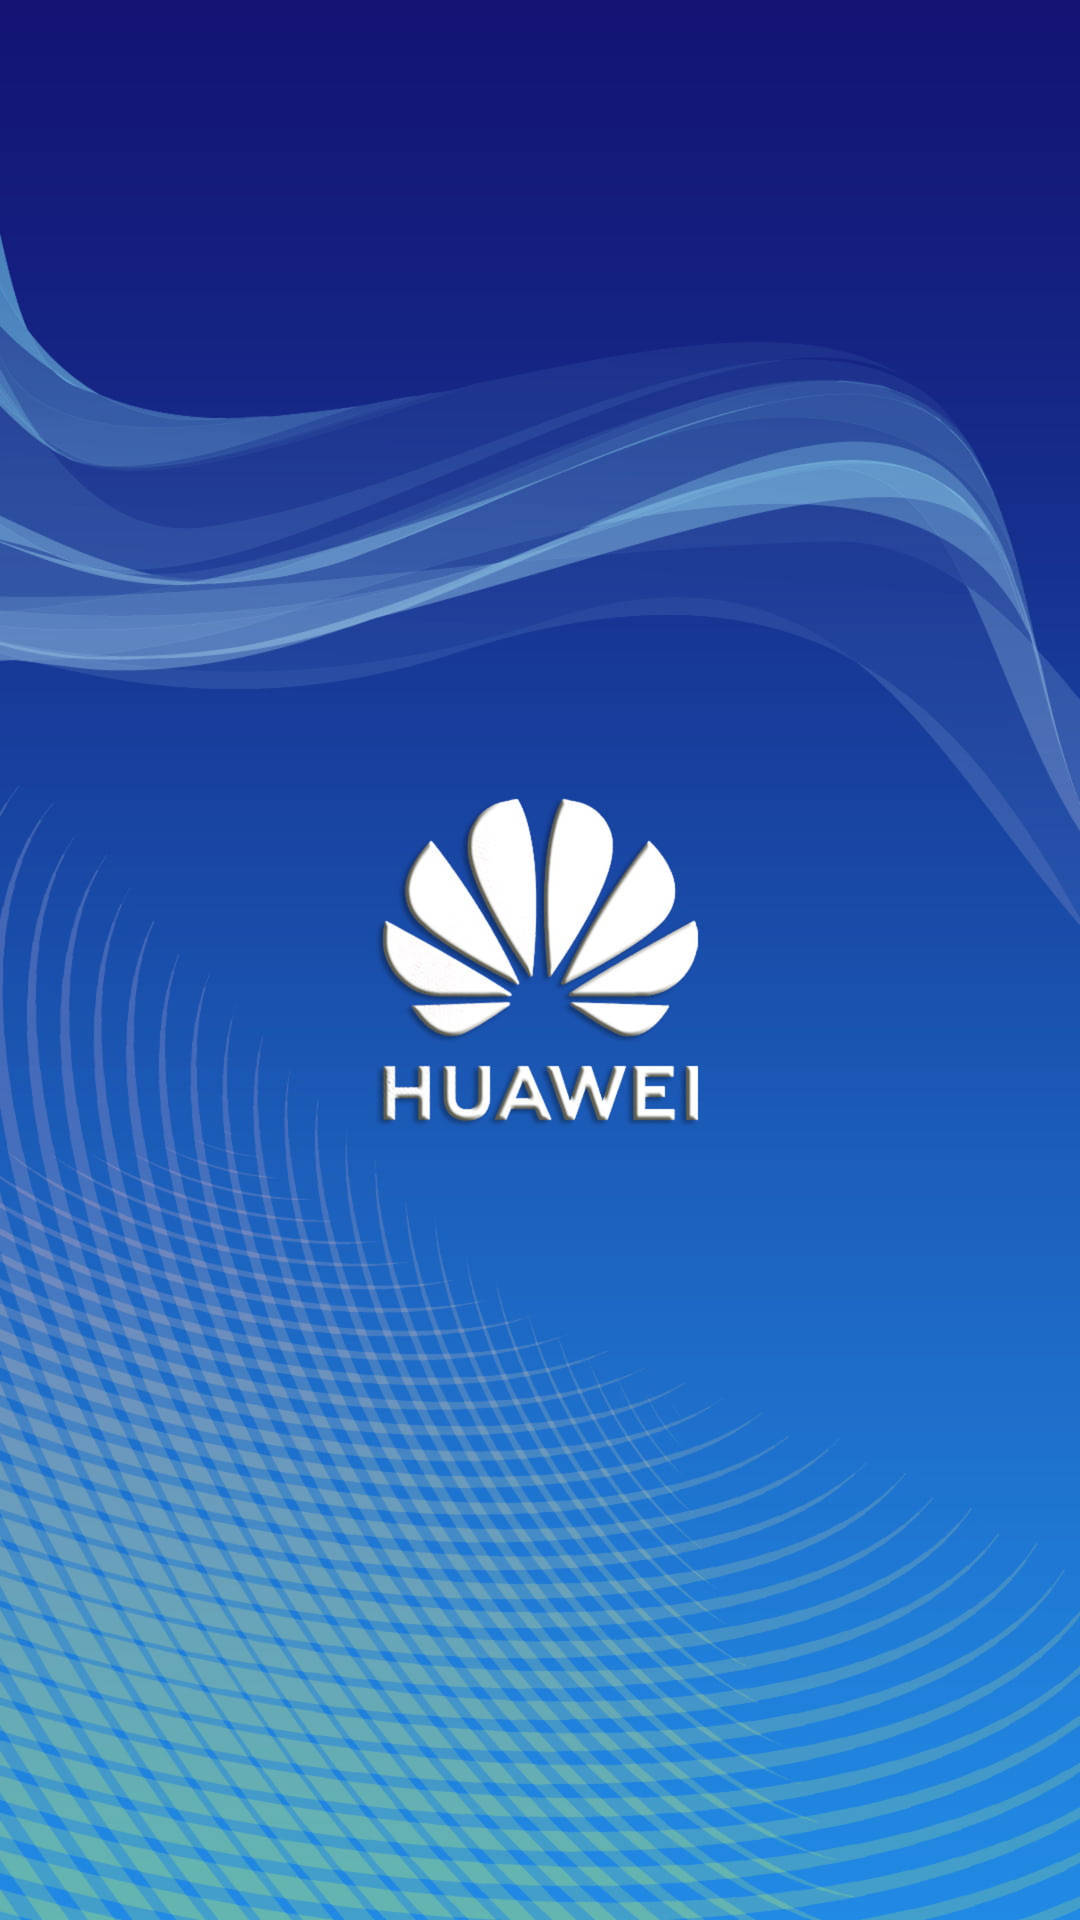 Free Huawei Wallpaper Downloads, [100+] Huawei Wallpapers for FREE |  